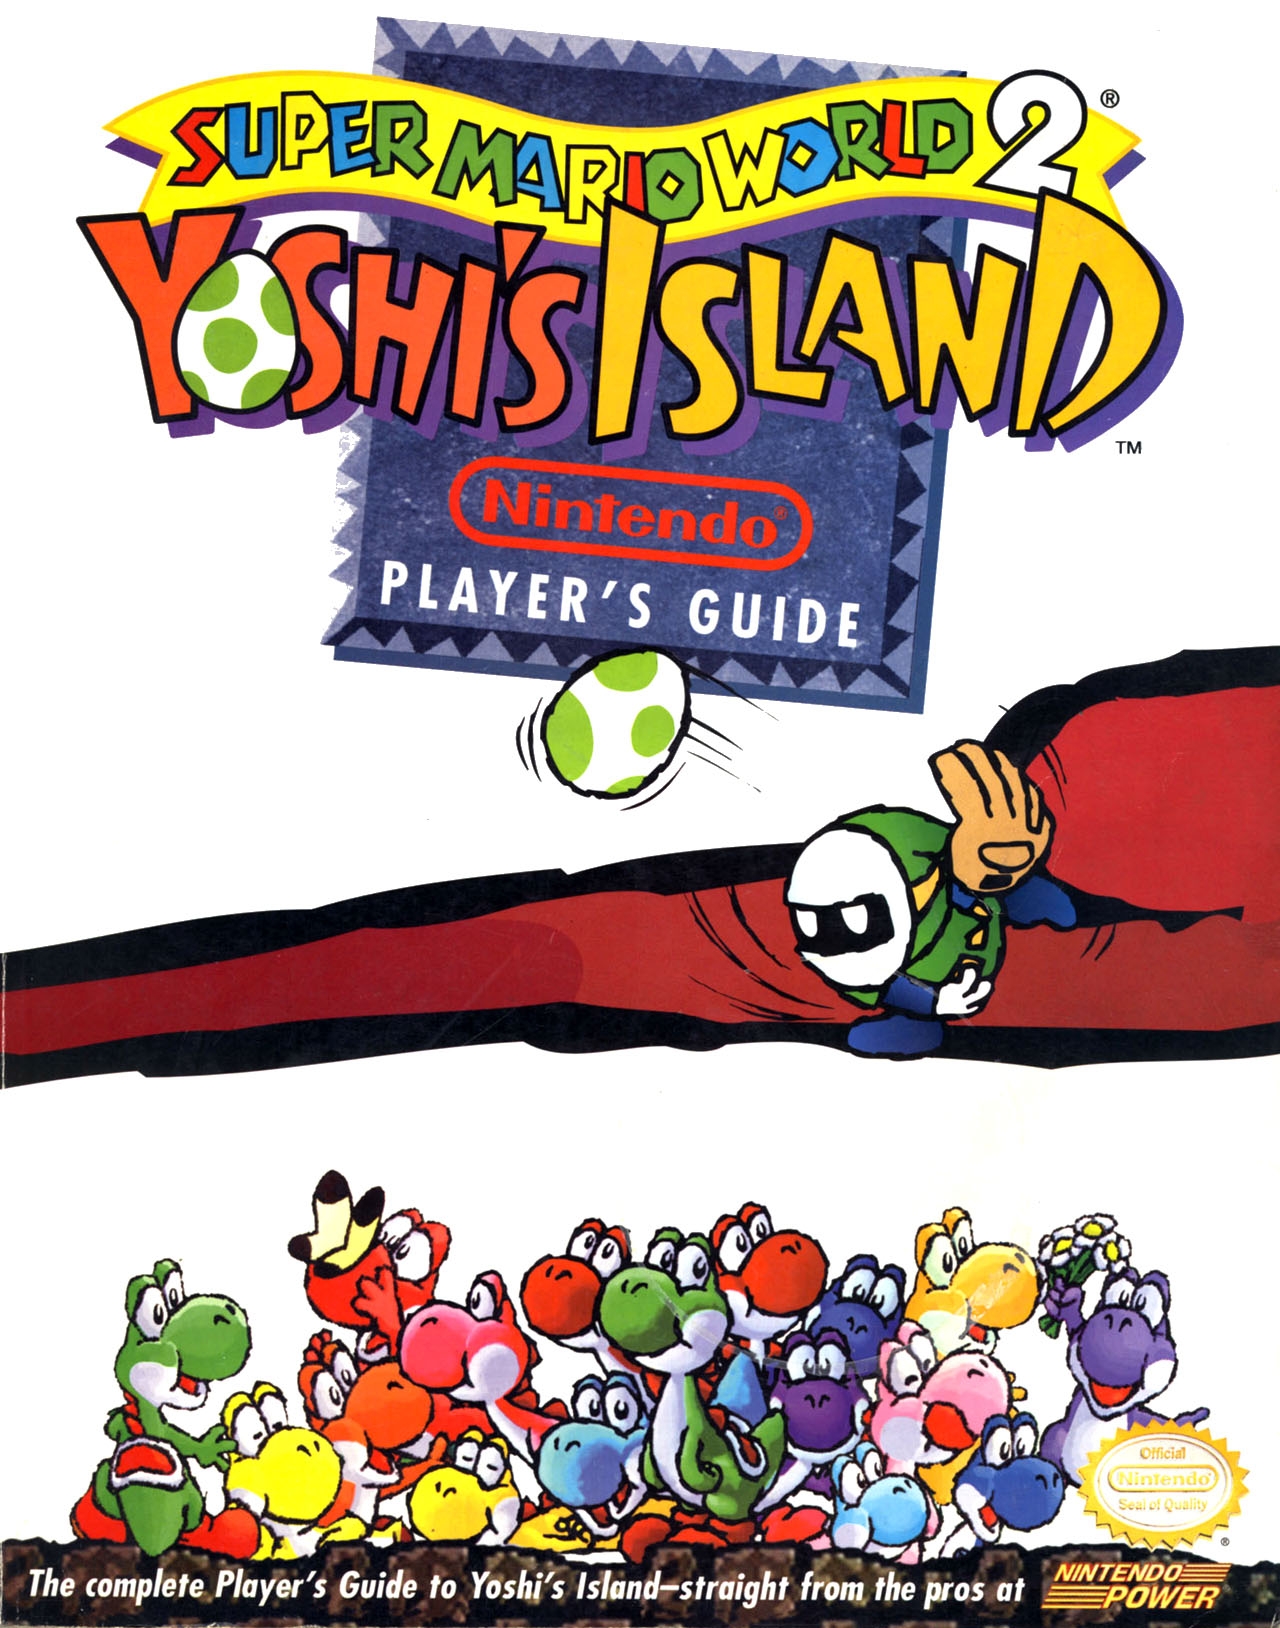 Nintendo Players Guide (SNES) - Super Mario World 2 - Yoshis Island (1995) 0